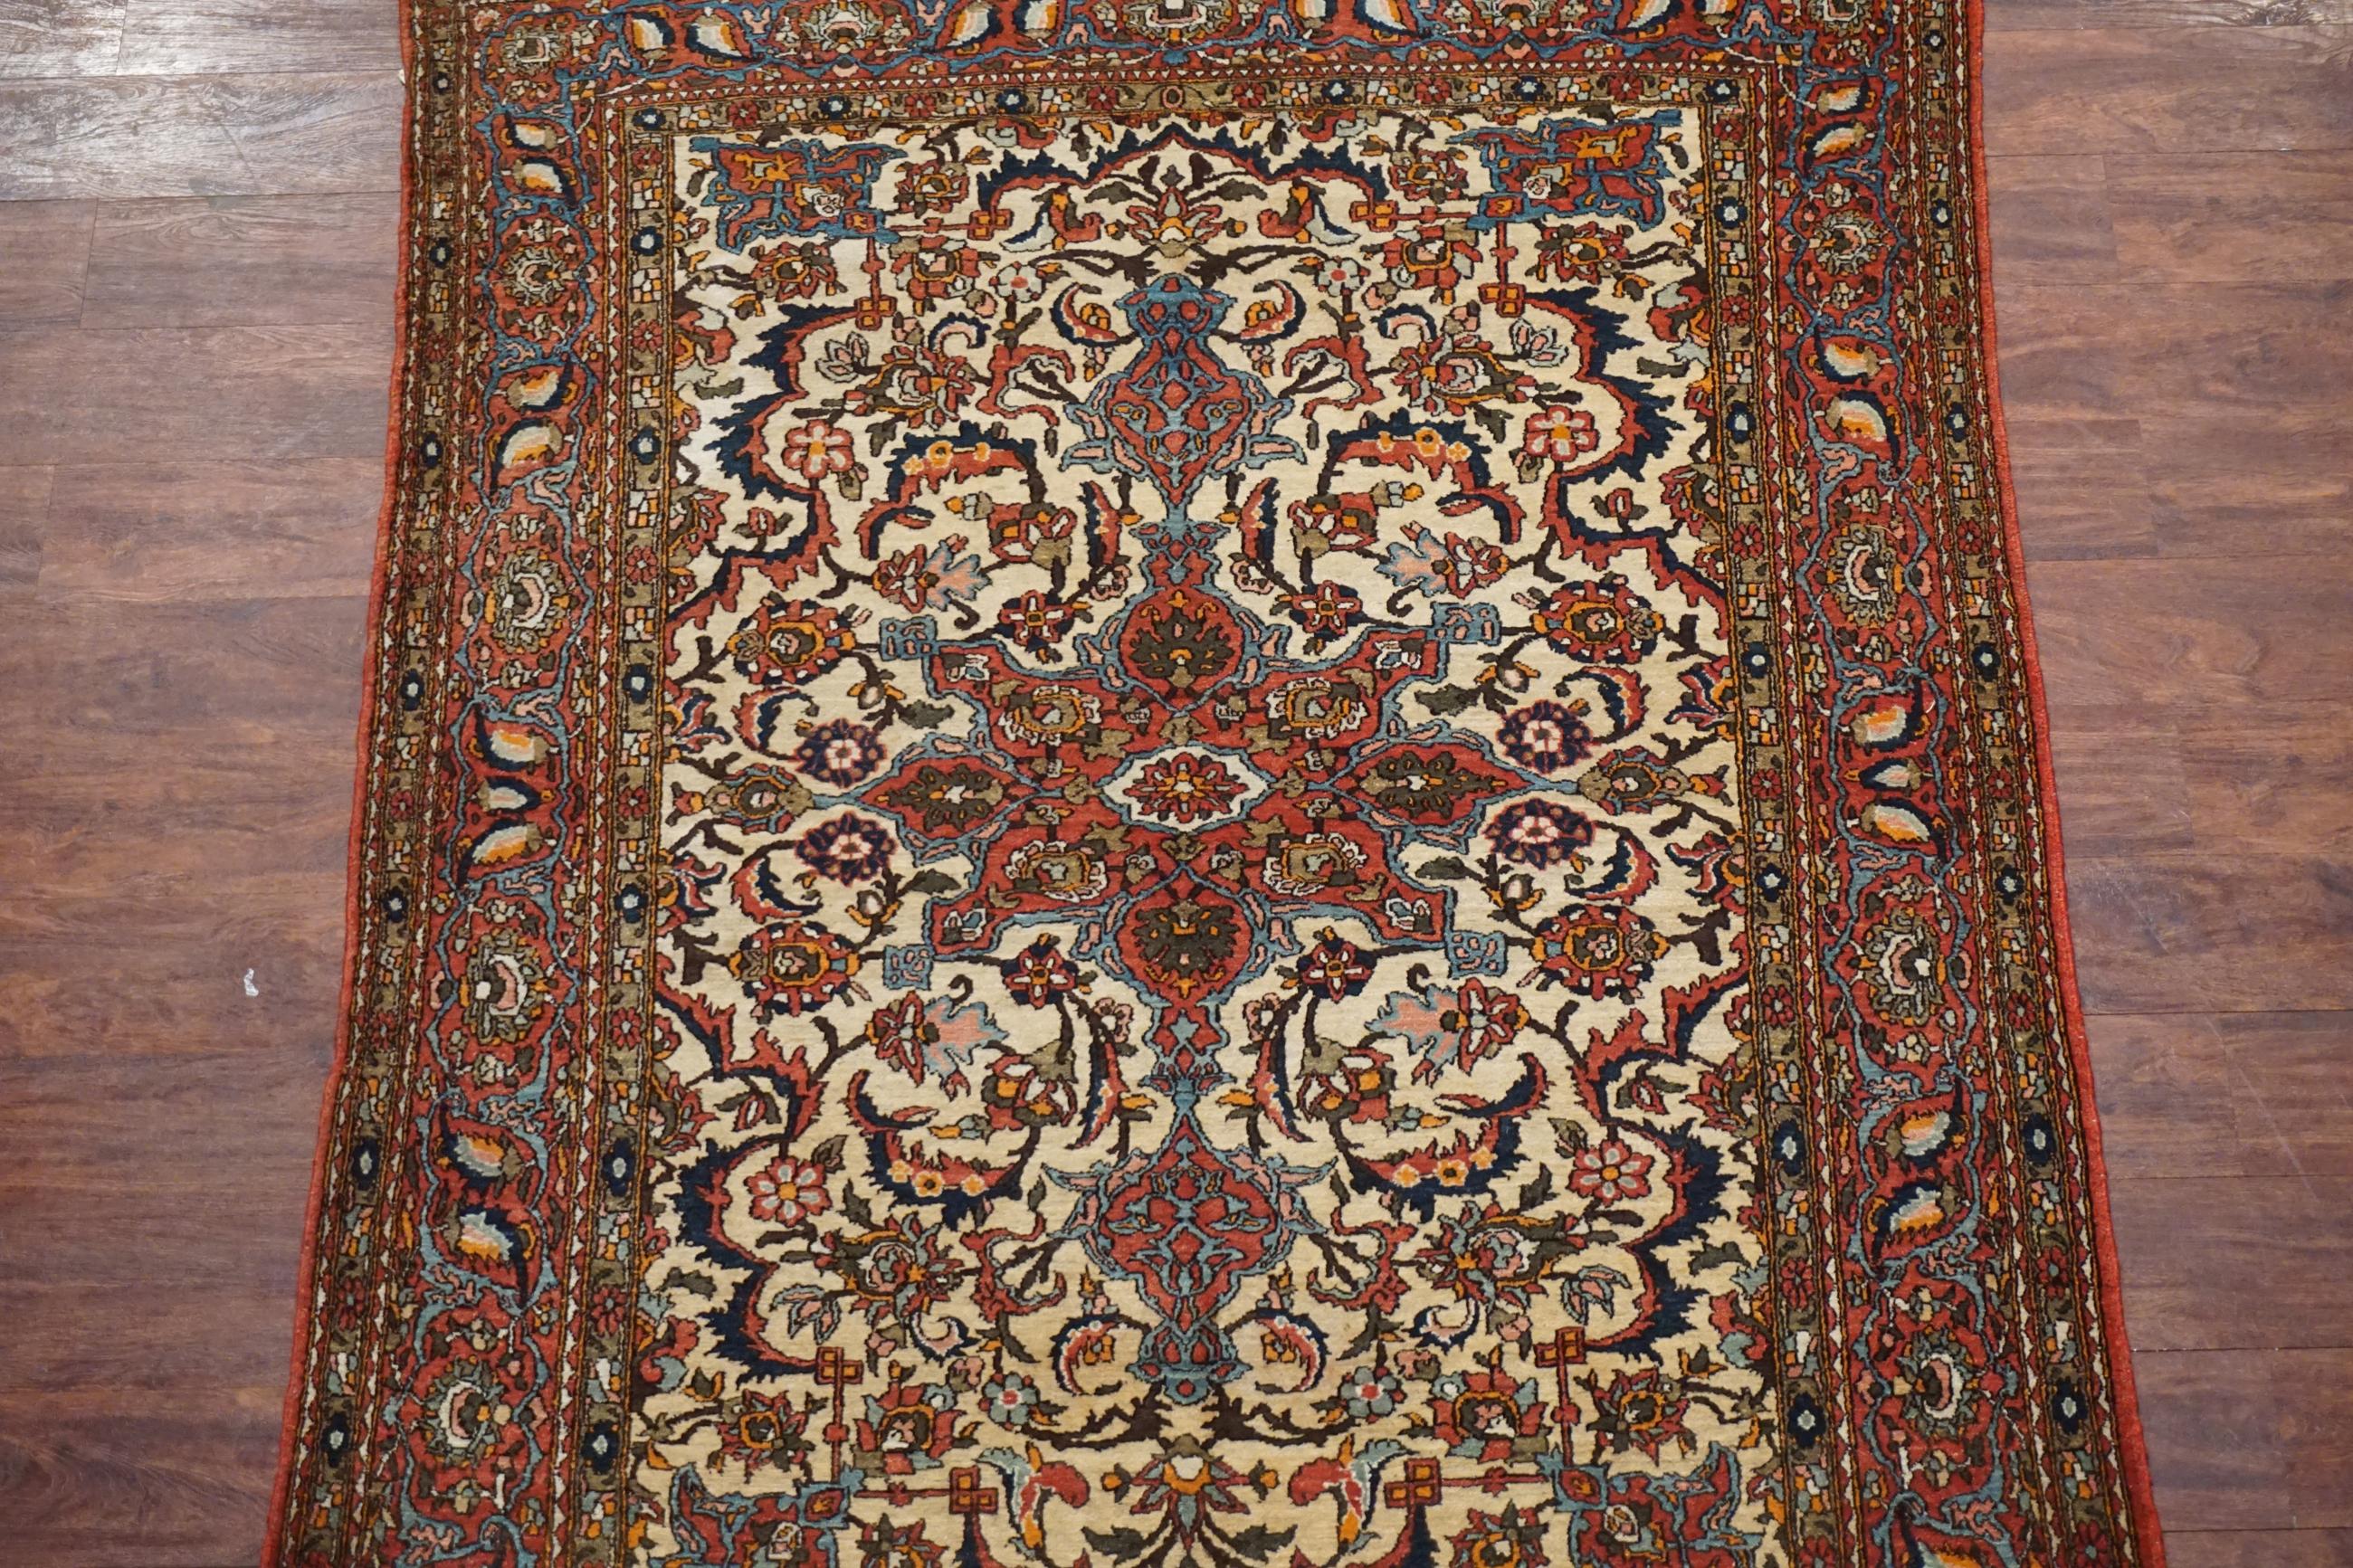 Fine Persian Isfahan rug

circa 1940

Measures: 4' 9